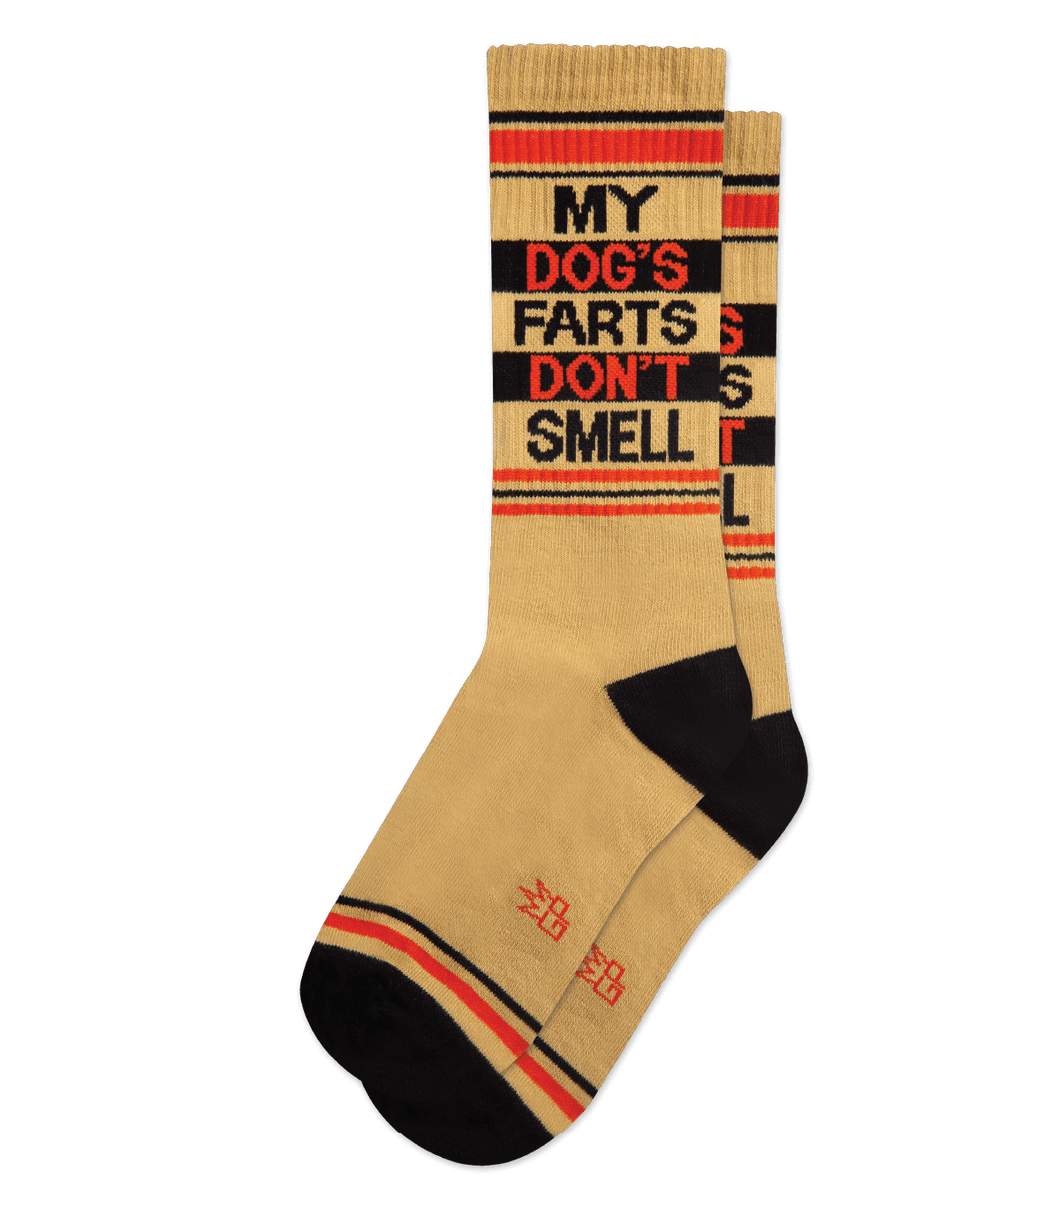 My Dog’s Farts Don’t Smell (Unisex) Gym Socks